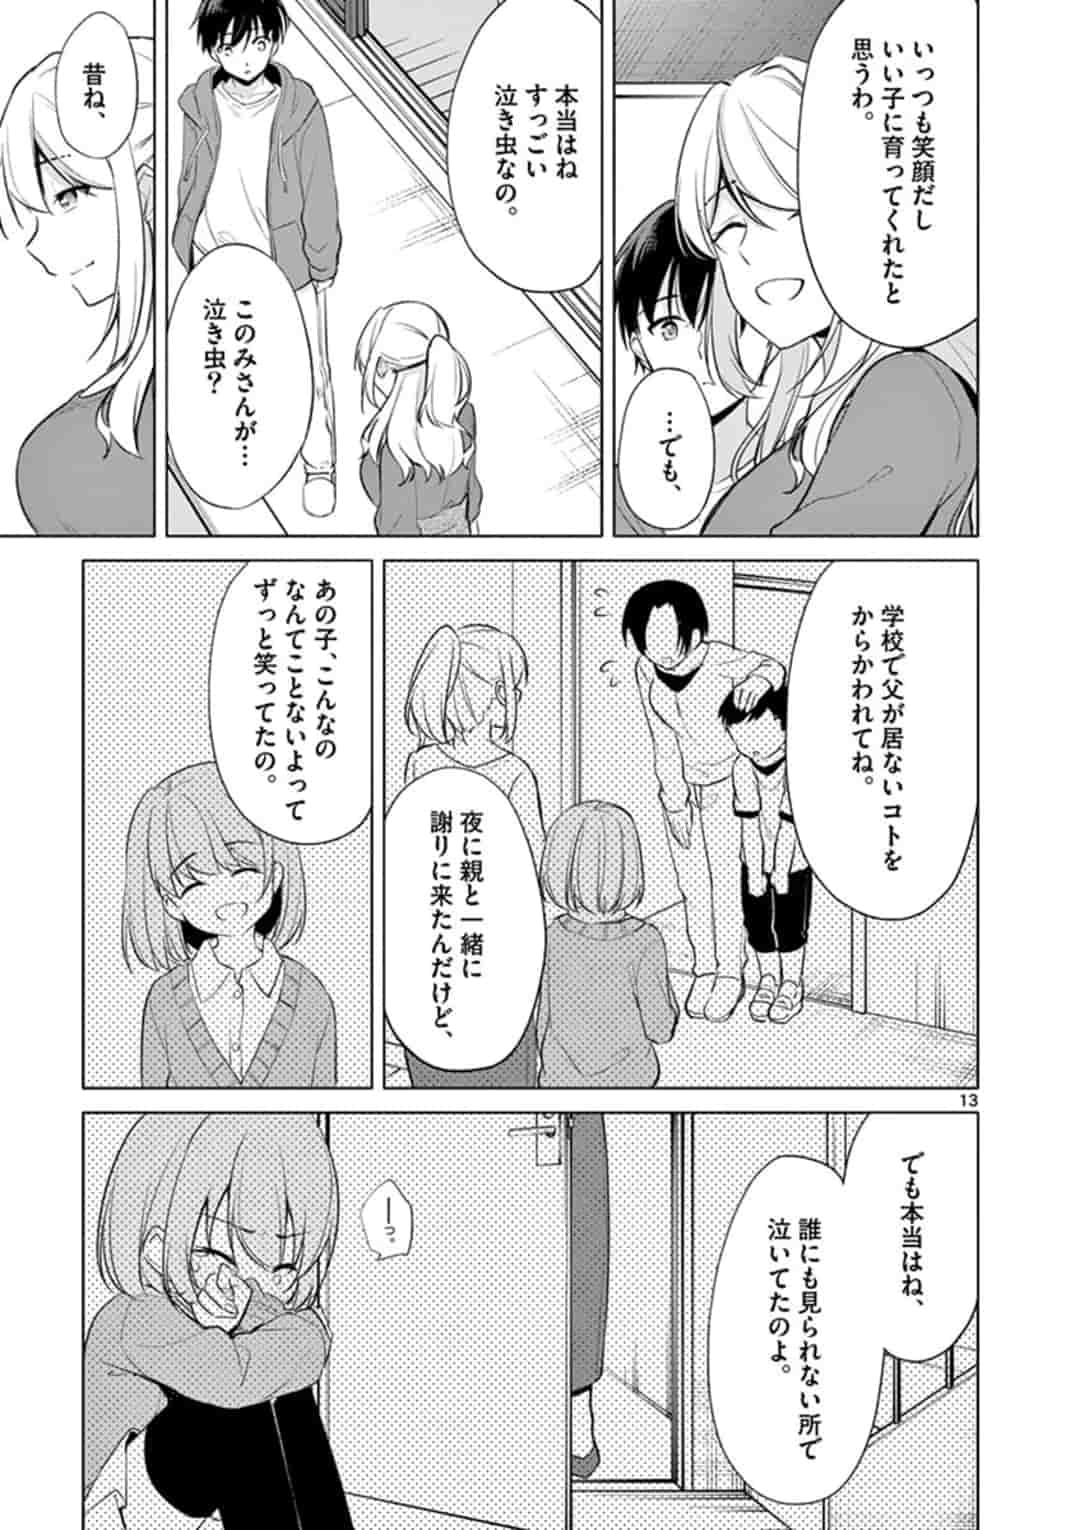 1/10 no Hanayome - Chapter 44 - Page 13